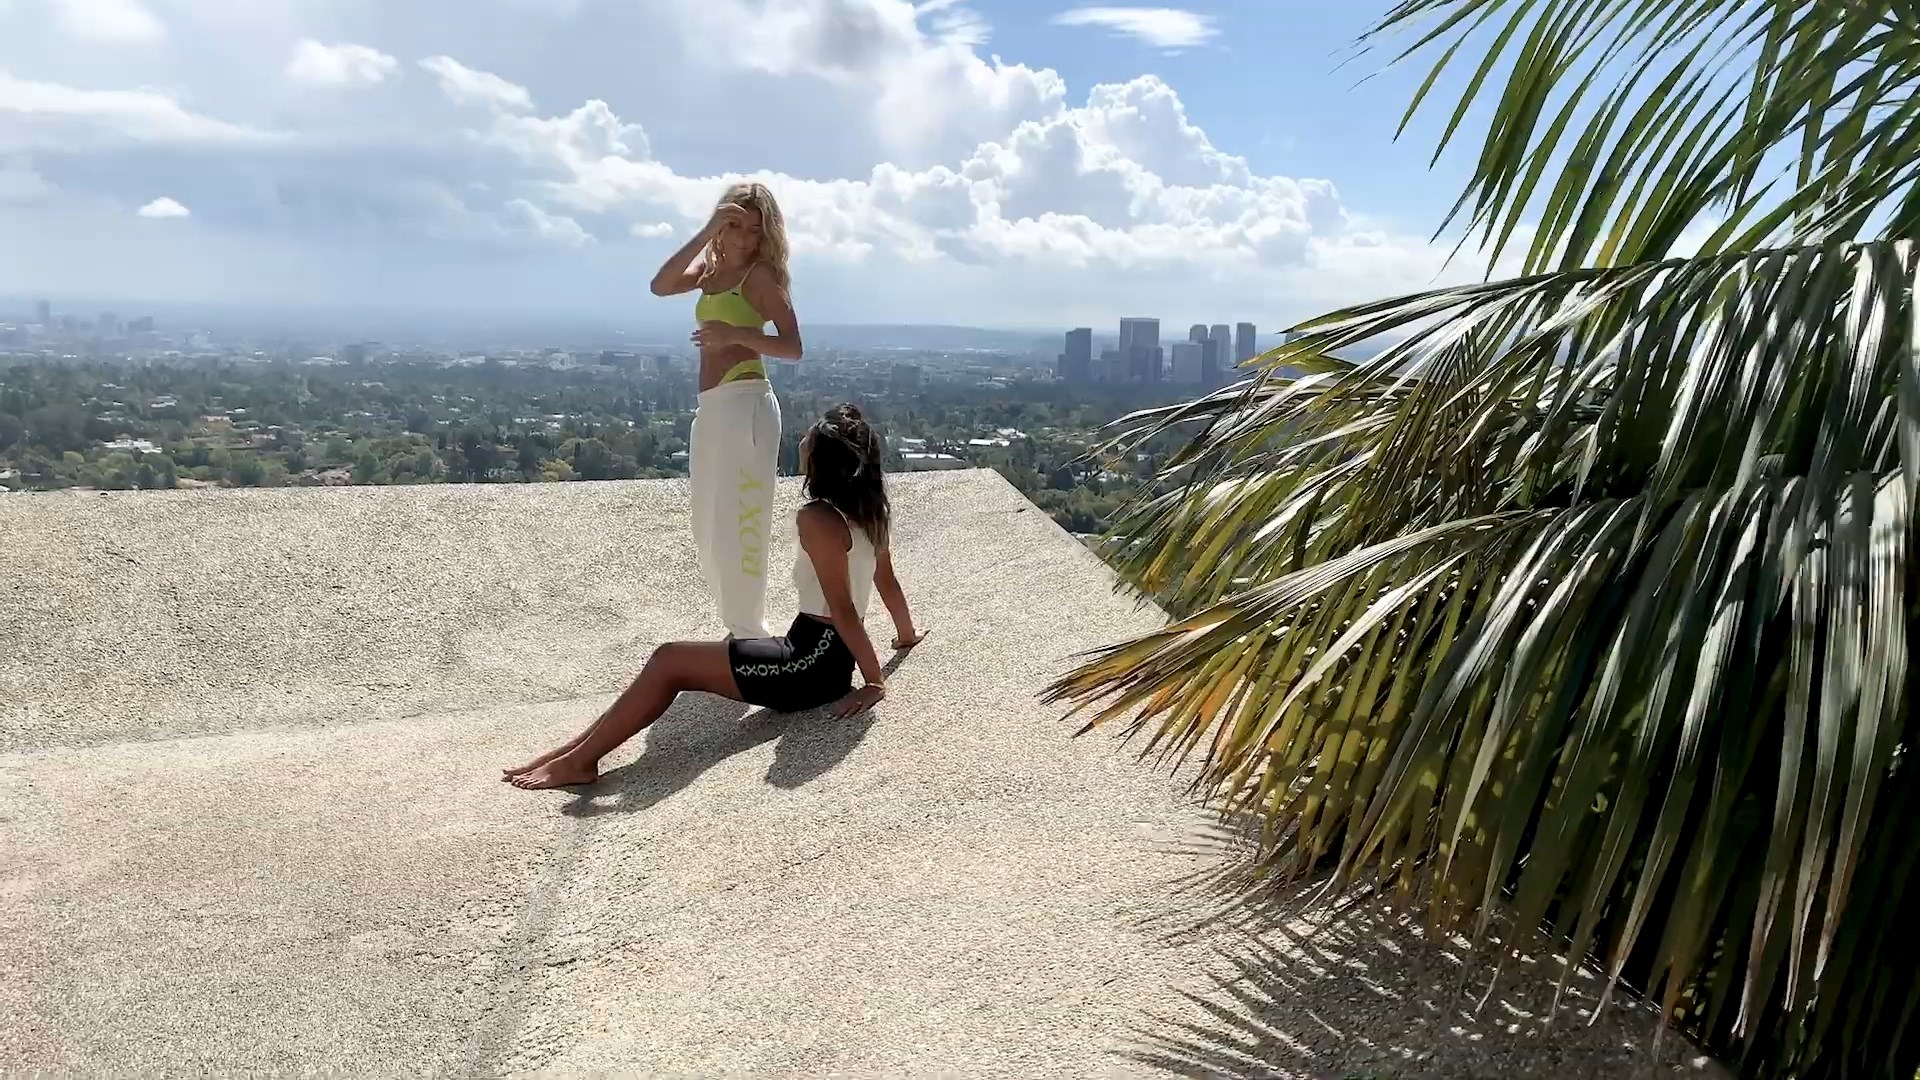 Hailey Bieber  Kelia Termini Pose for Roxy x Sister Summer 2020 Campaign (26 Photos + Videos)